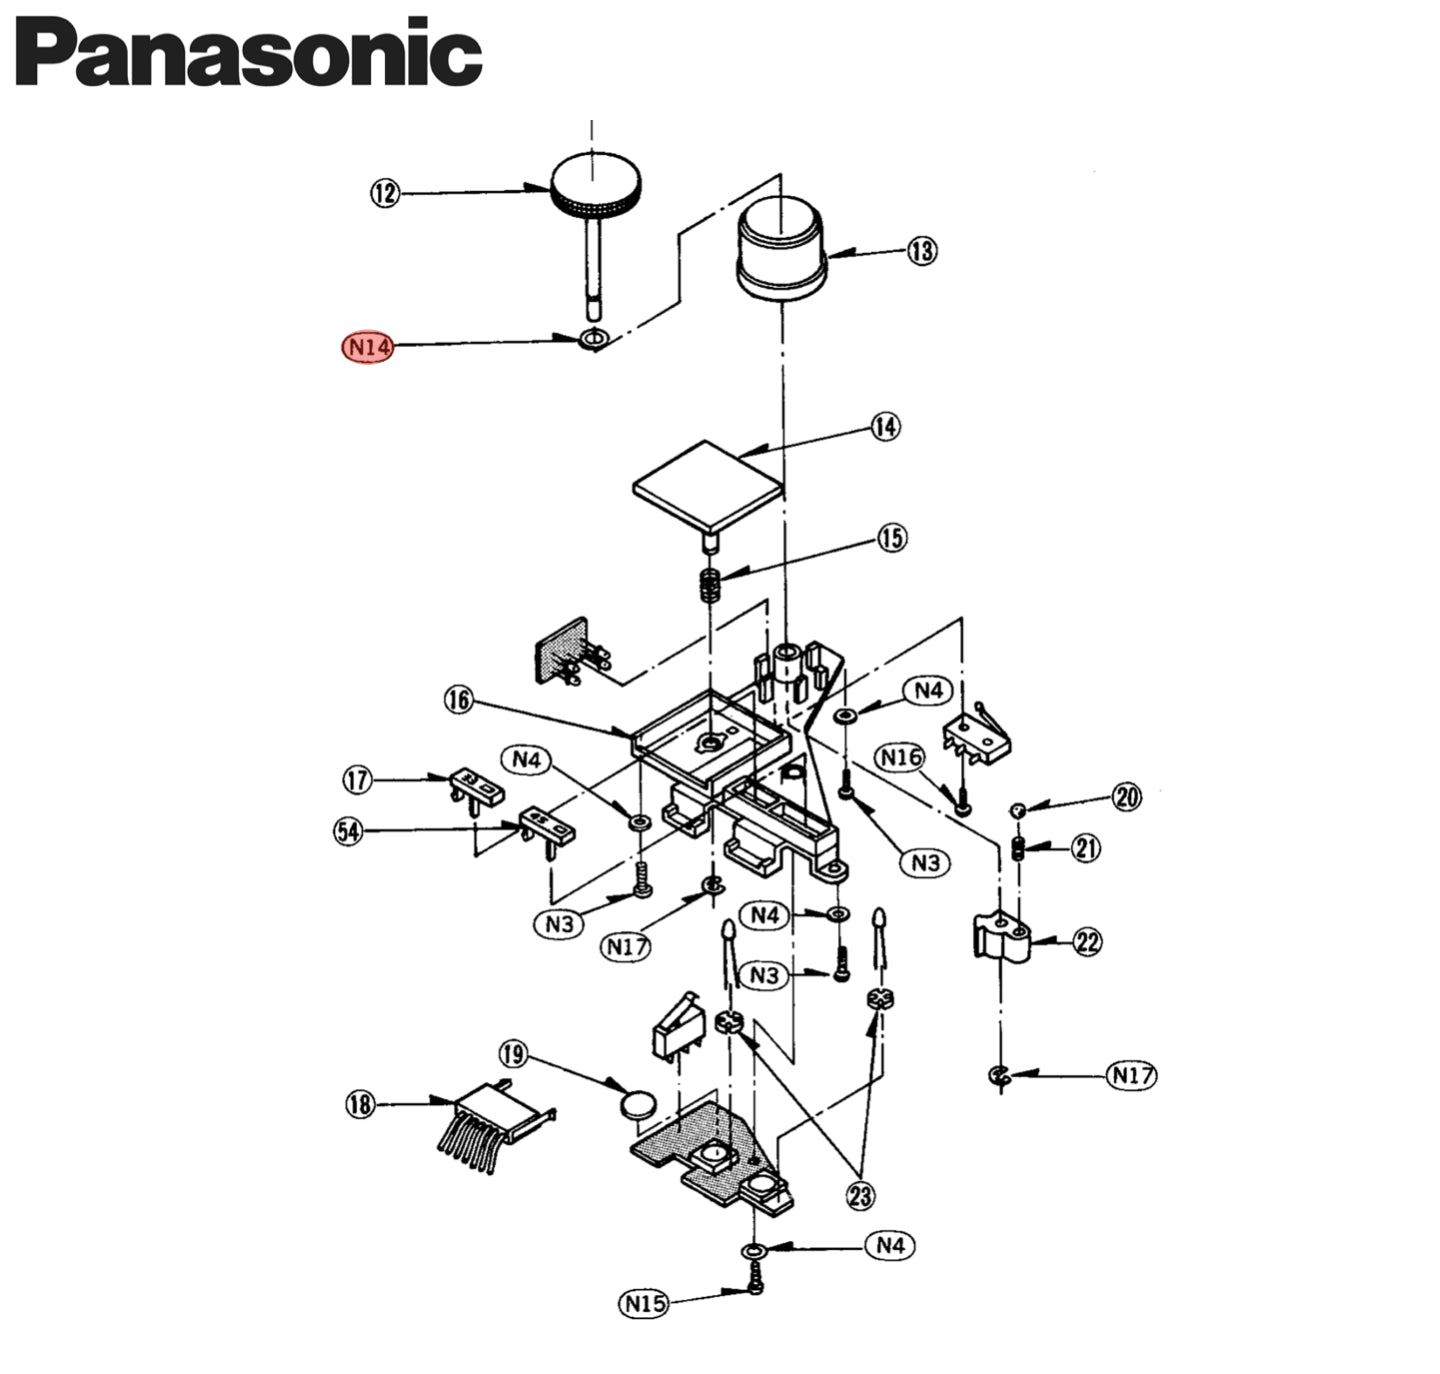 Panasonic Stop Washer SFXW910J02